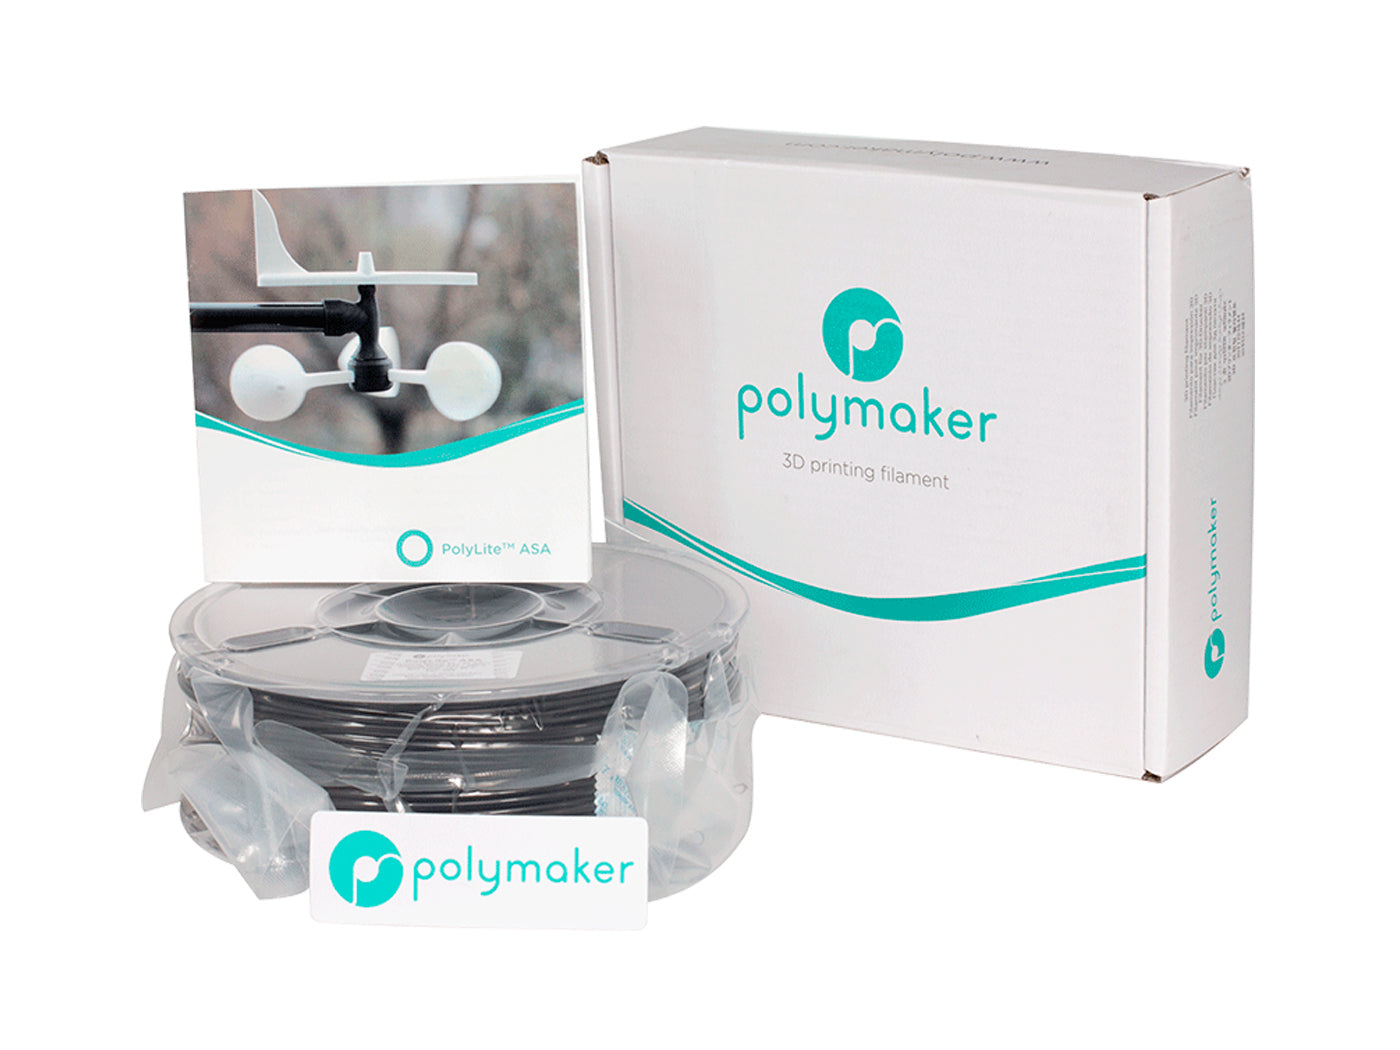 PolyLite PETG 1.75mm 1kg - EC 3D Printing Supplies